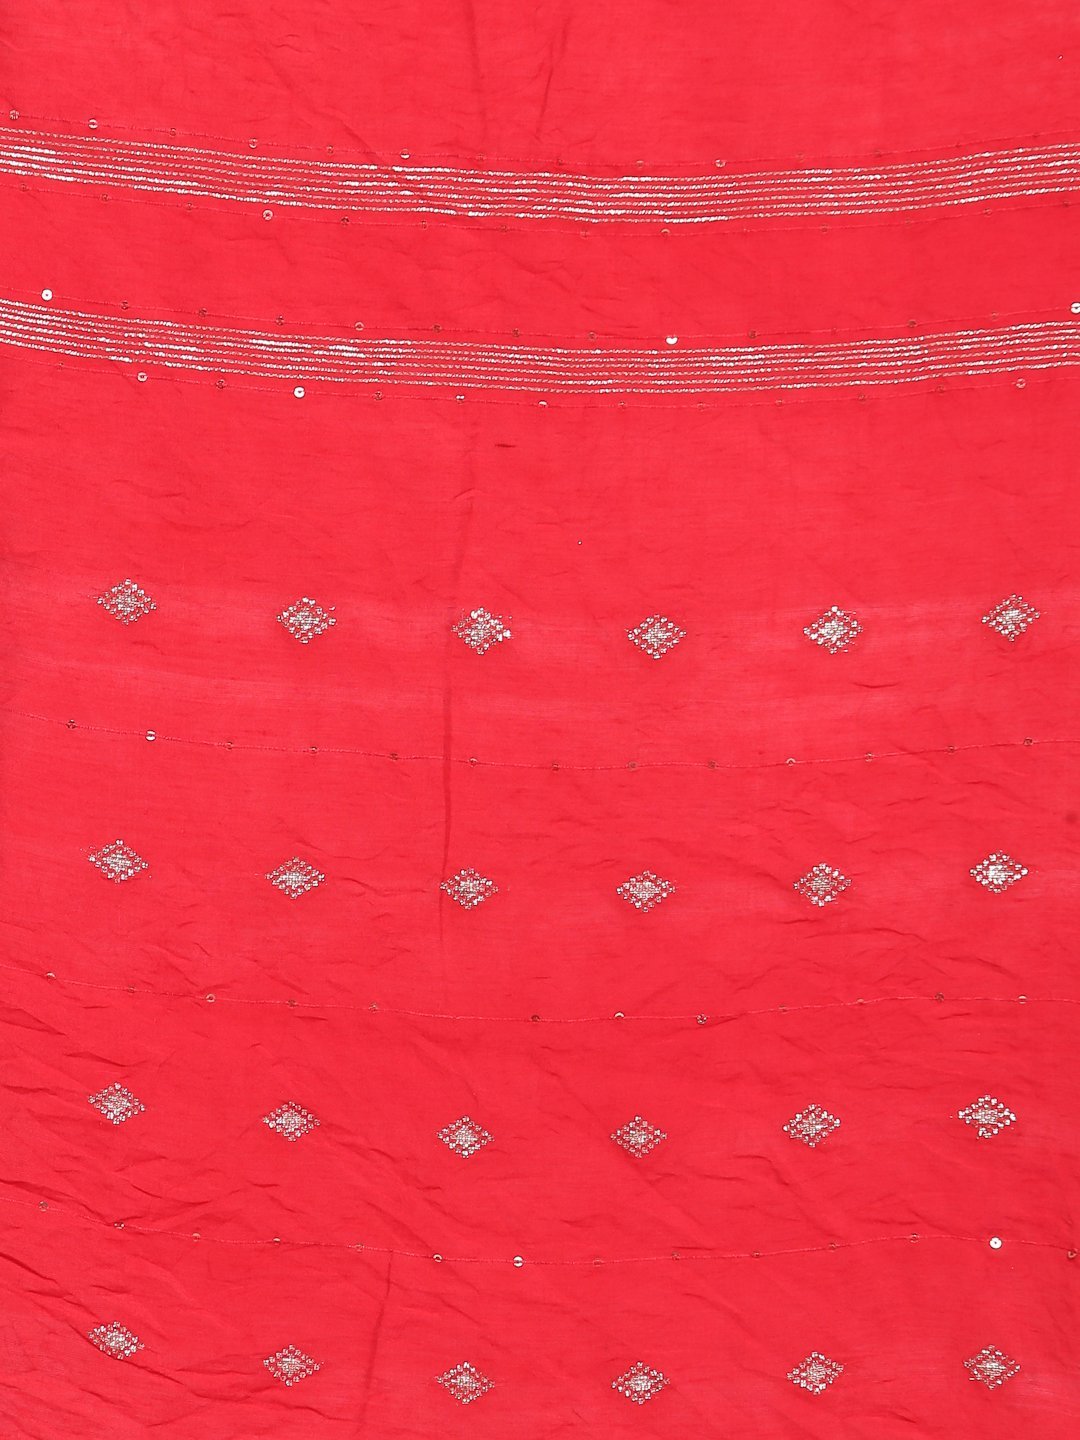 Women's Red Cotton Silk Printed Casual Dupatta - Myshka